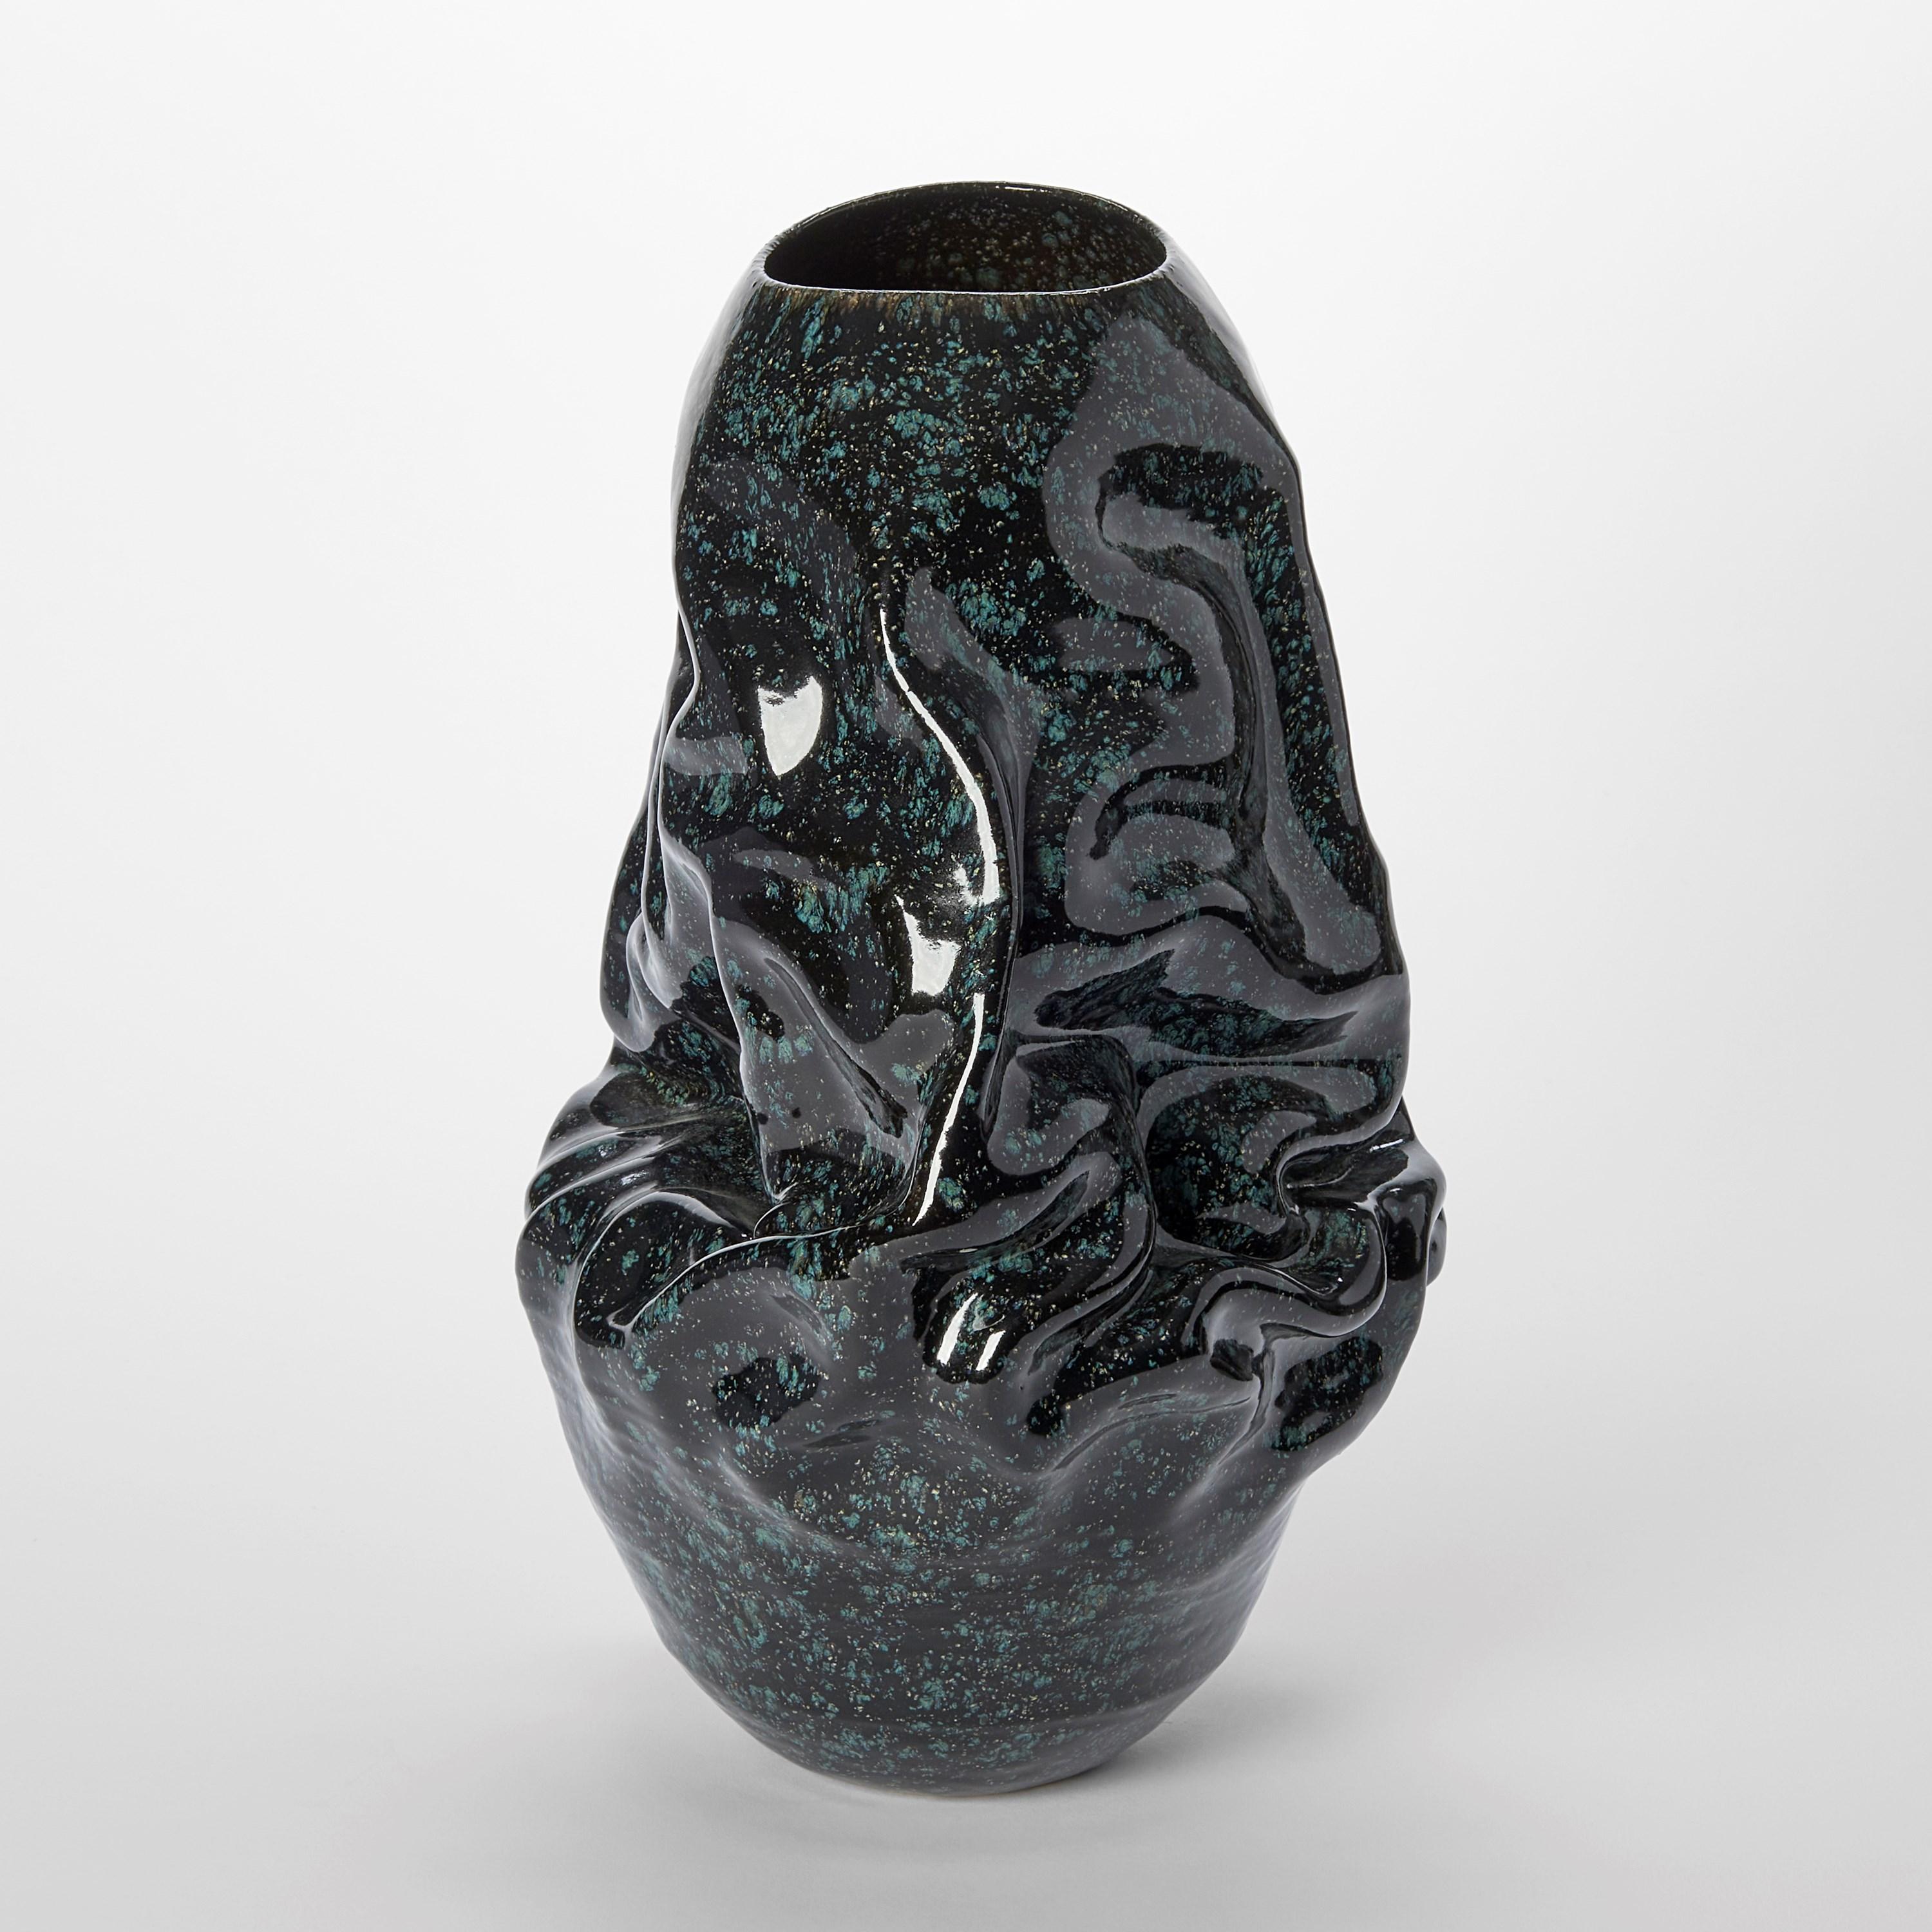 Organic Modern Dehydrated Form with Cosmic Black Glaze No 115 by Nicholas Arroyave-Portela For Sale